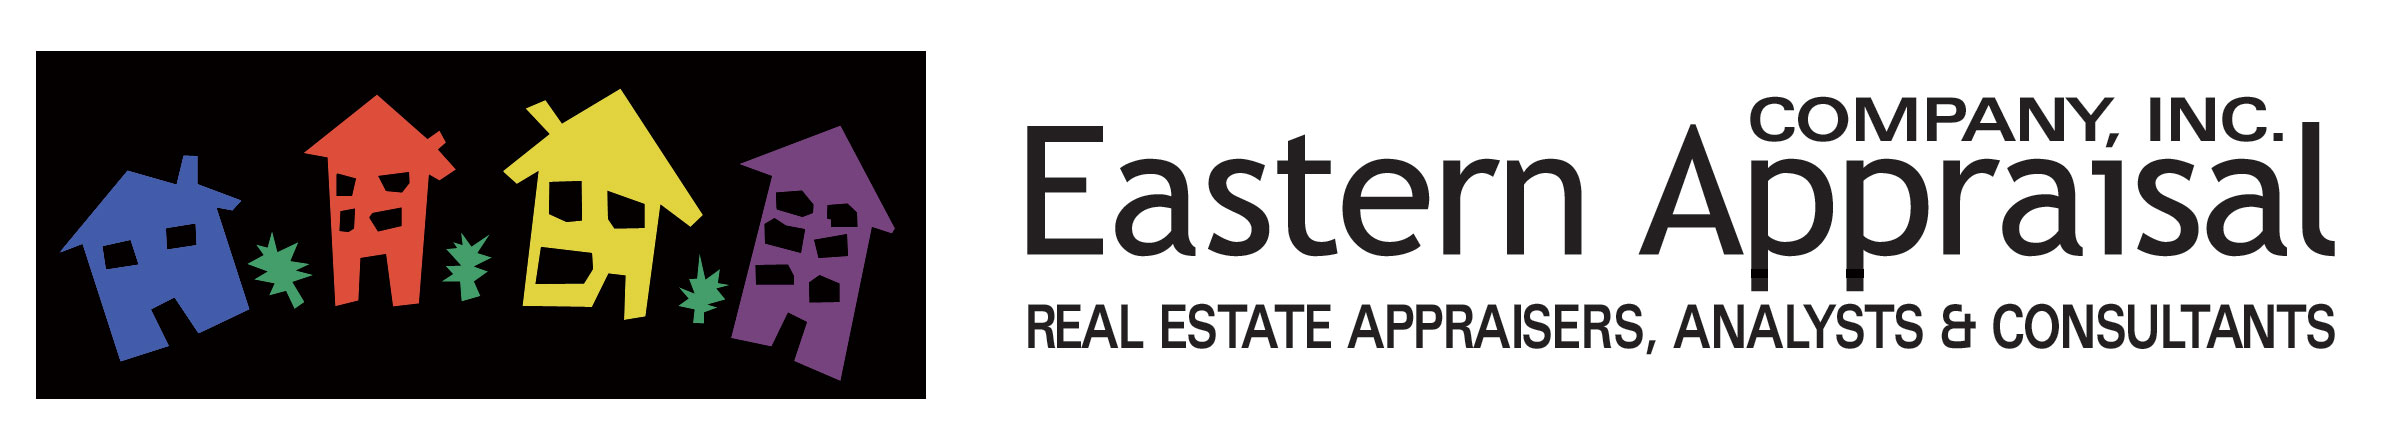 Eastern Appraisal Company Logo